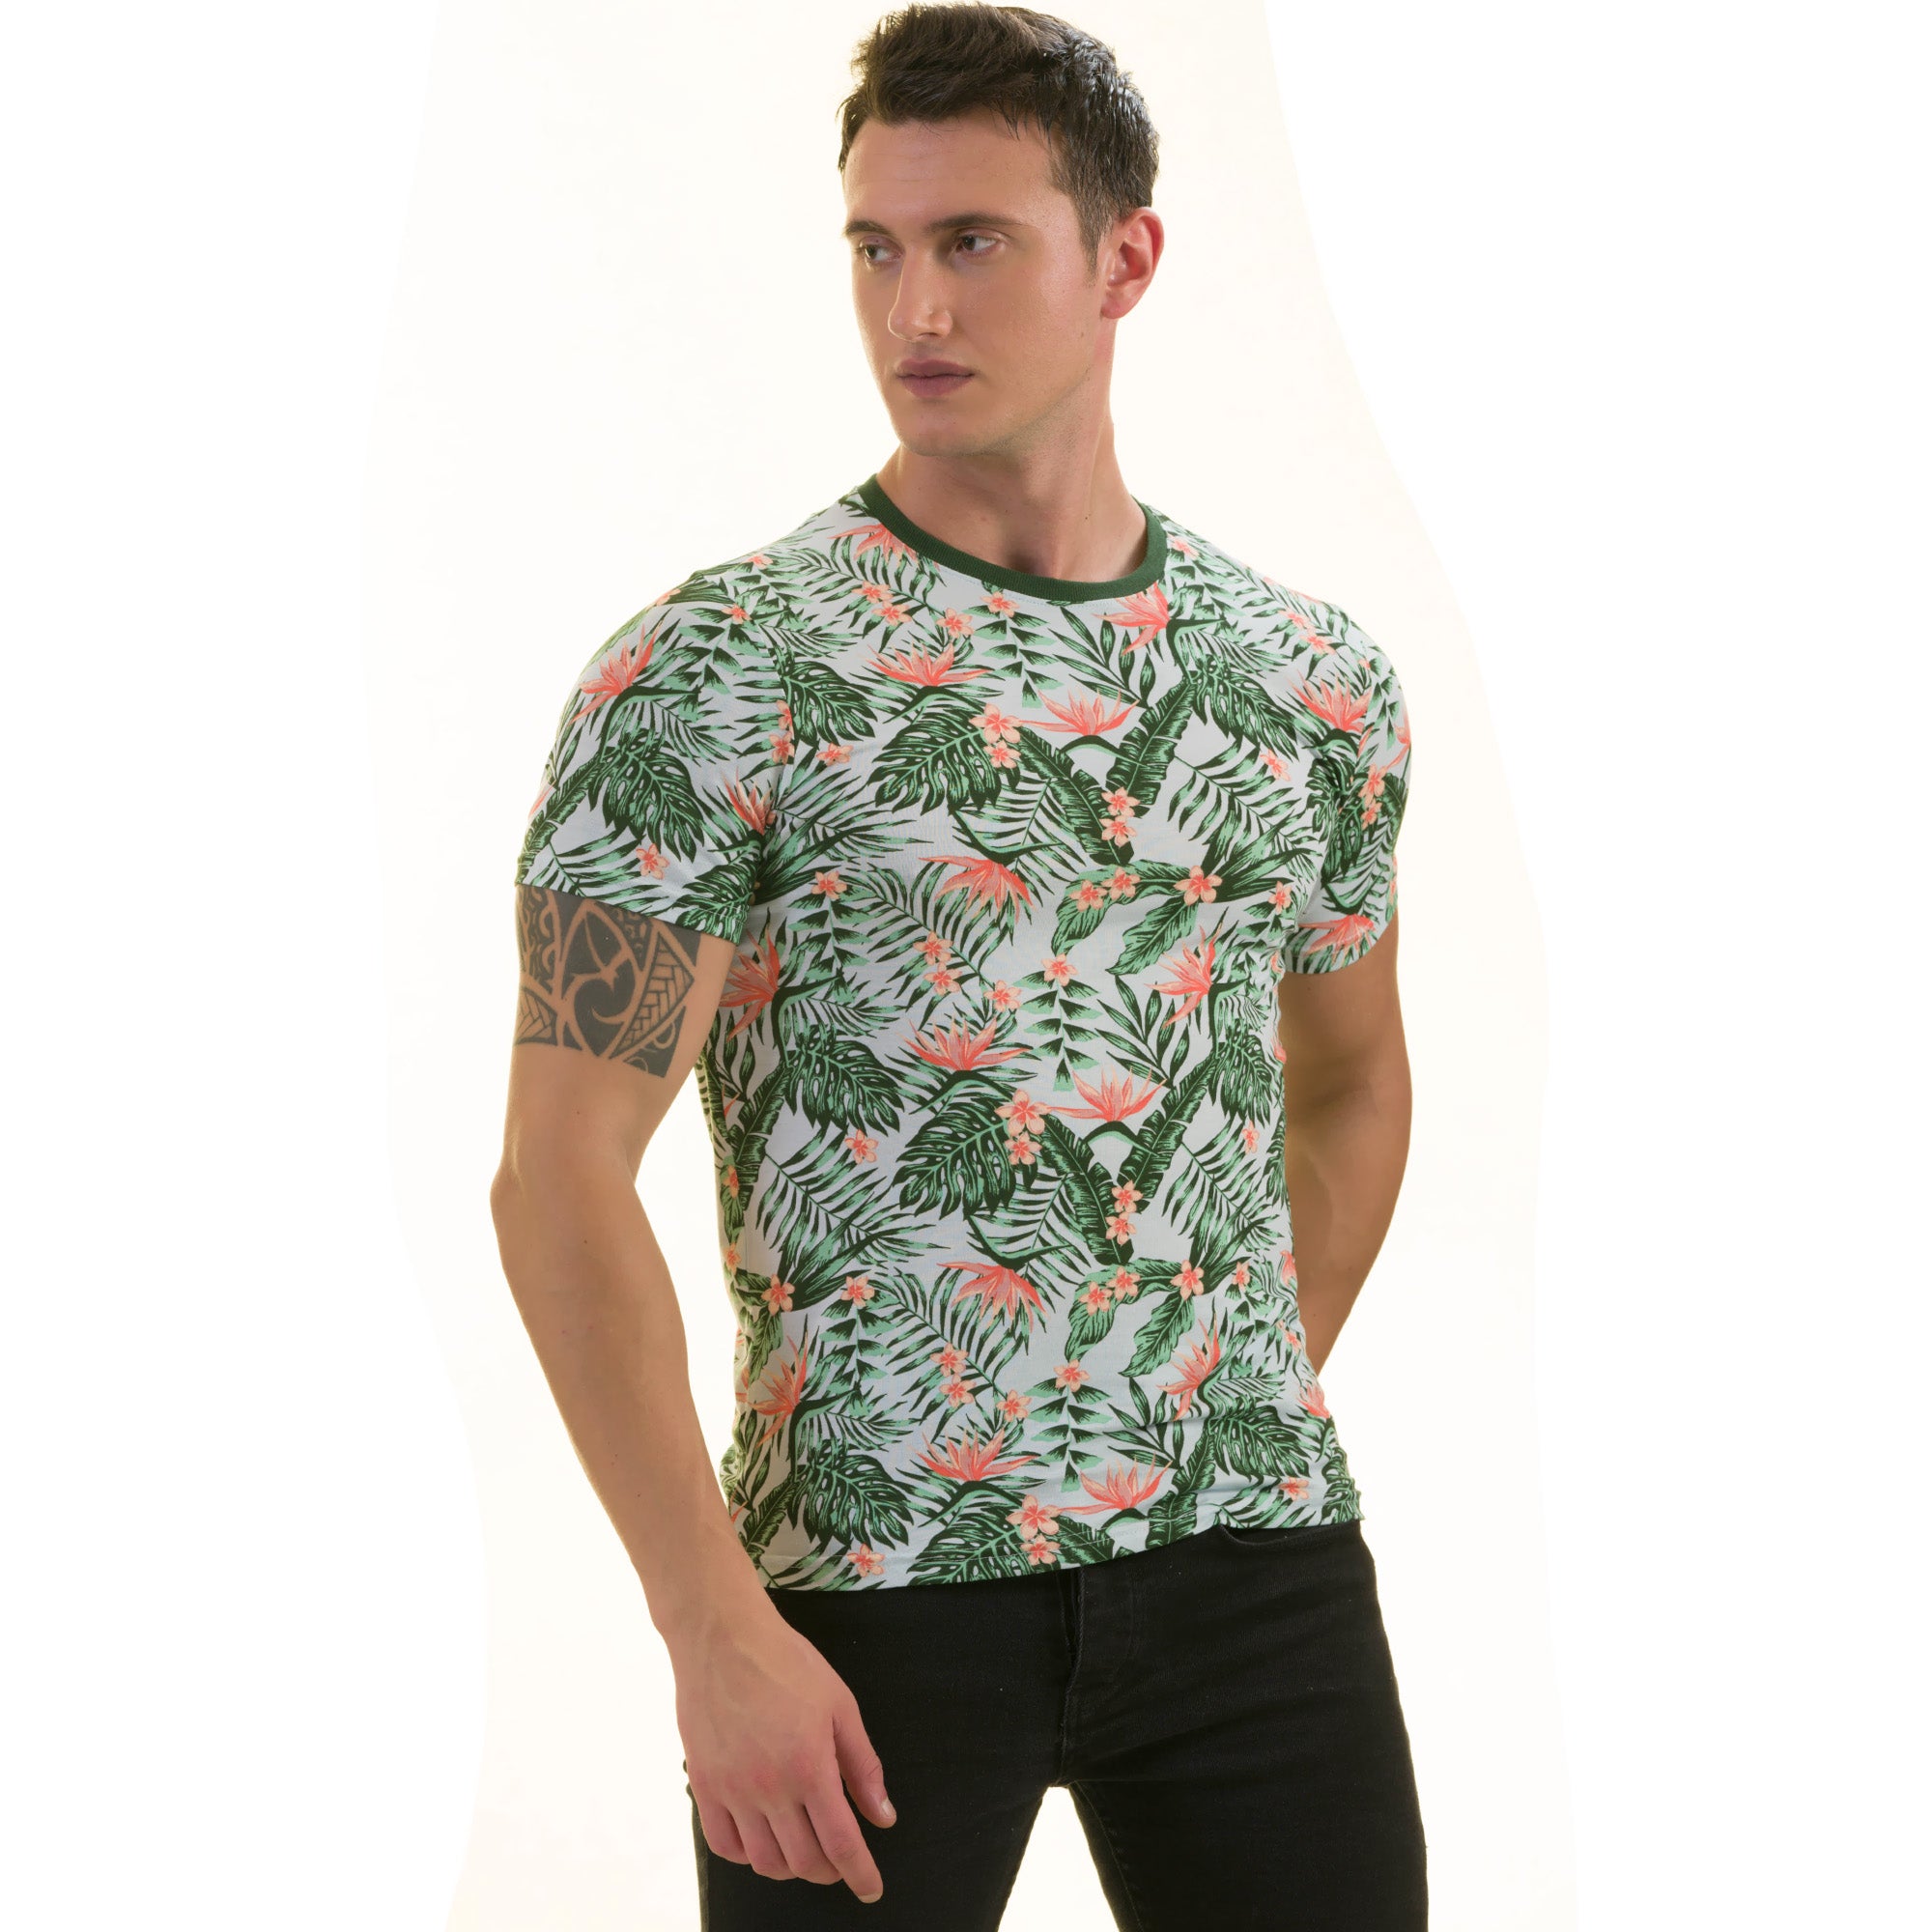 Peach Floral Green Leaves T- Shirt | European Made Premium Quality - Crew Neck Short Sleeve T-Shirts